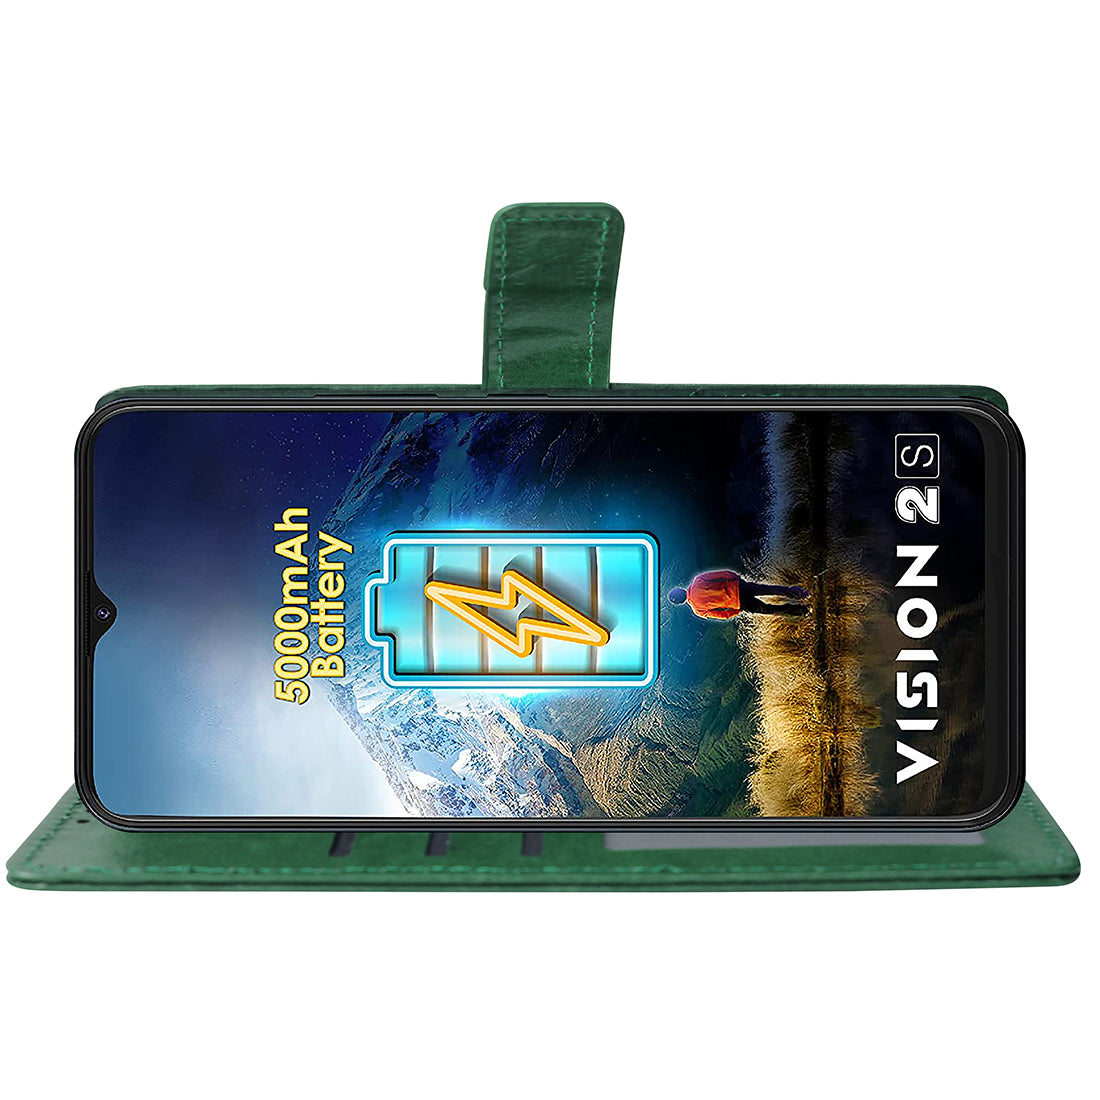 Premium Wallet Flip Cover for Itel Vision 2s